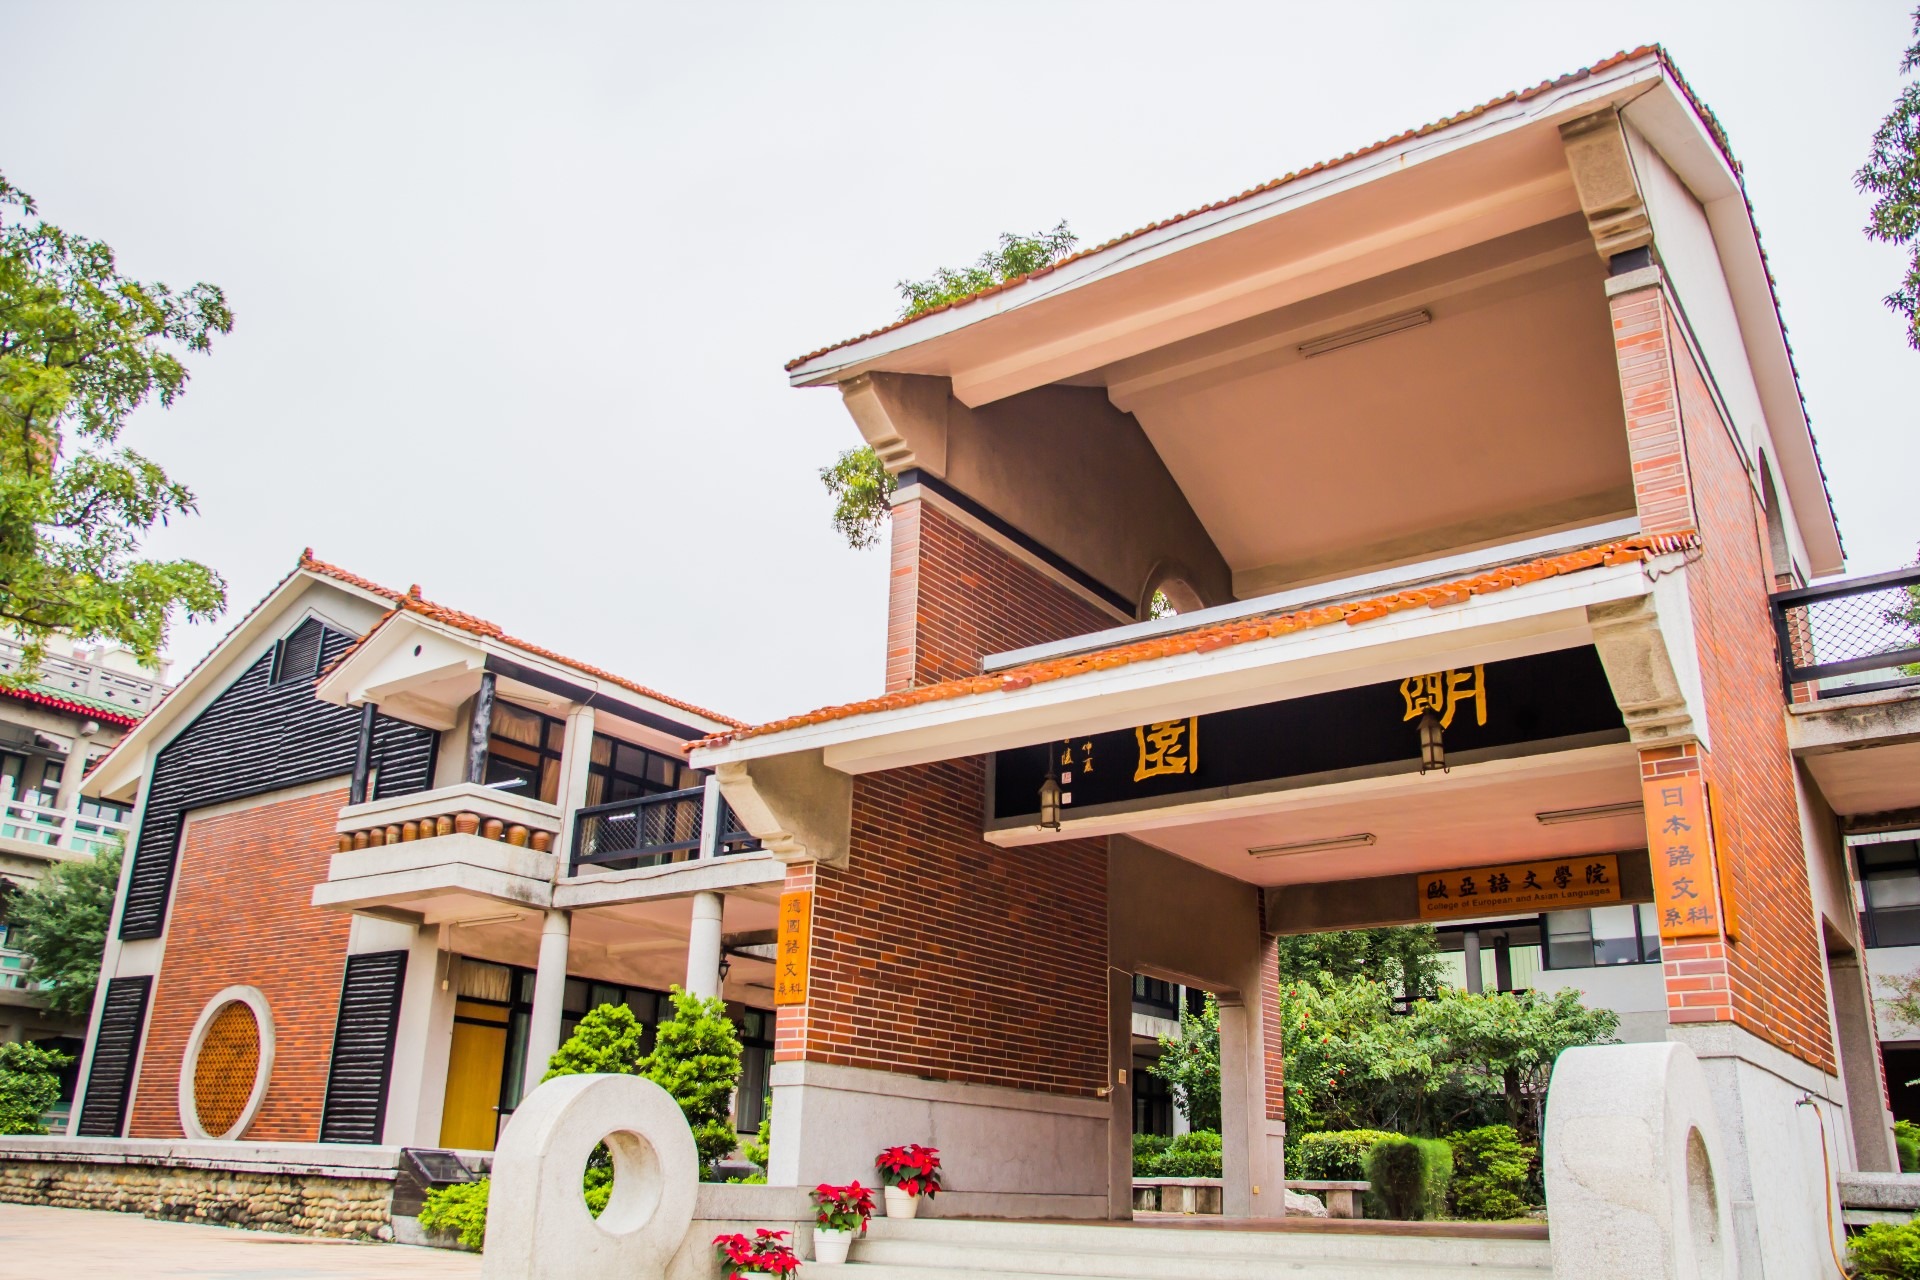 Chinese Language Center, Wenzao Ursuline University of Languages campus